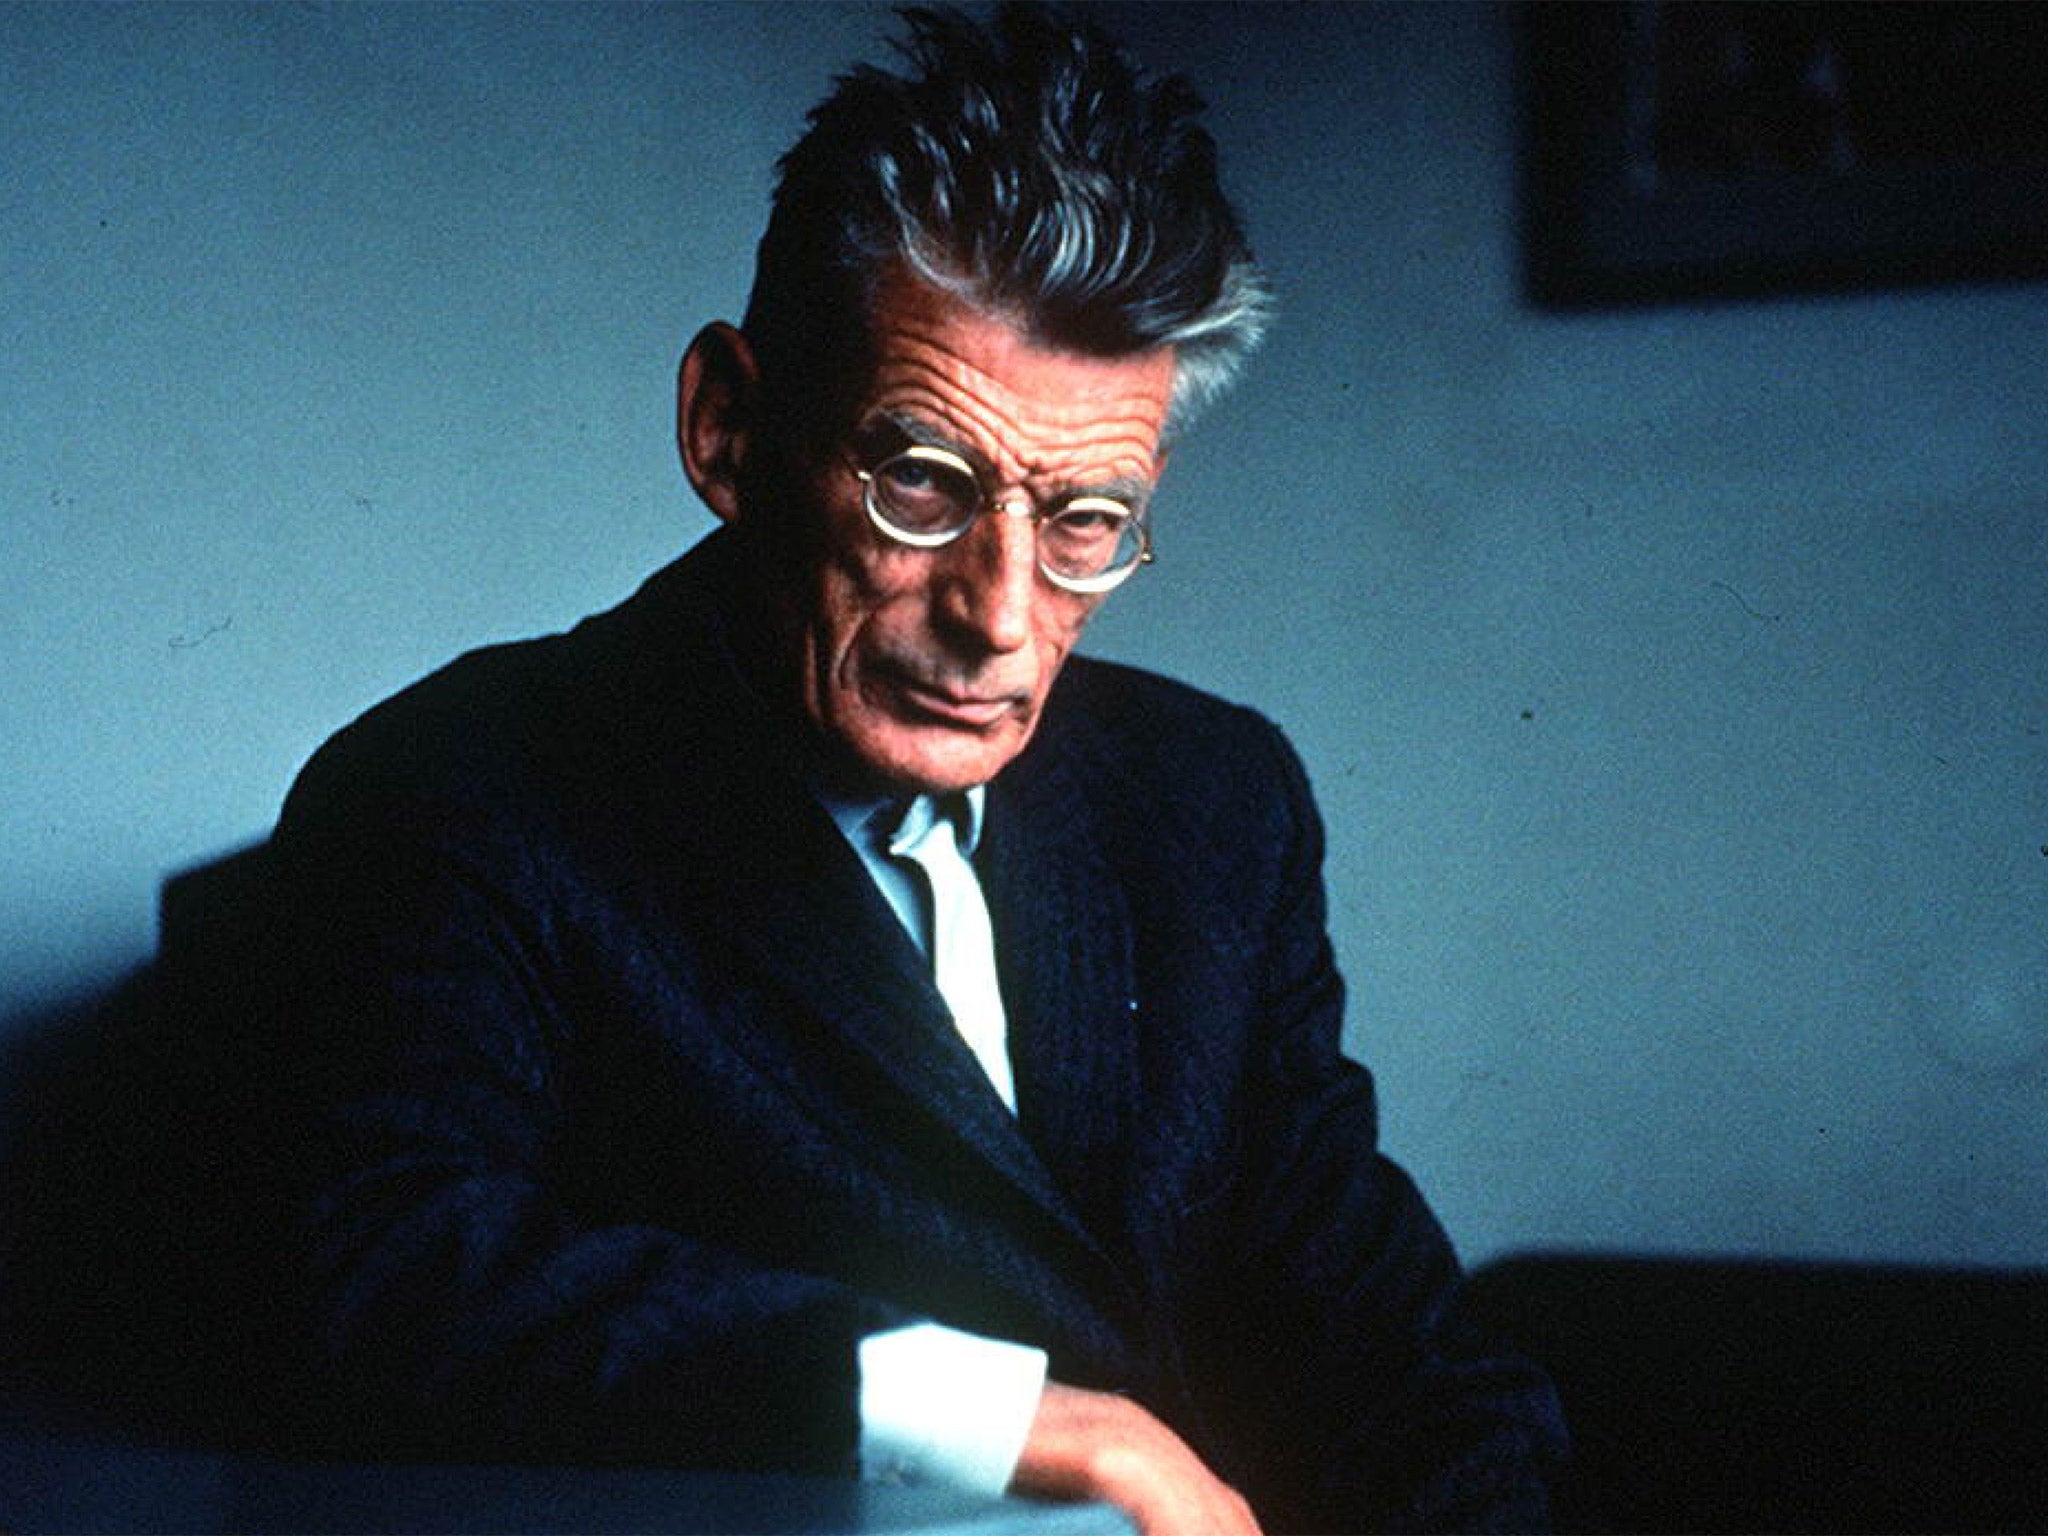 Unhappy days: Resistance spy turned Nobel prize winner Samuel Beckett